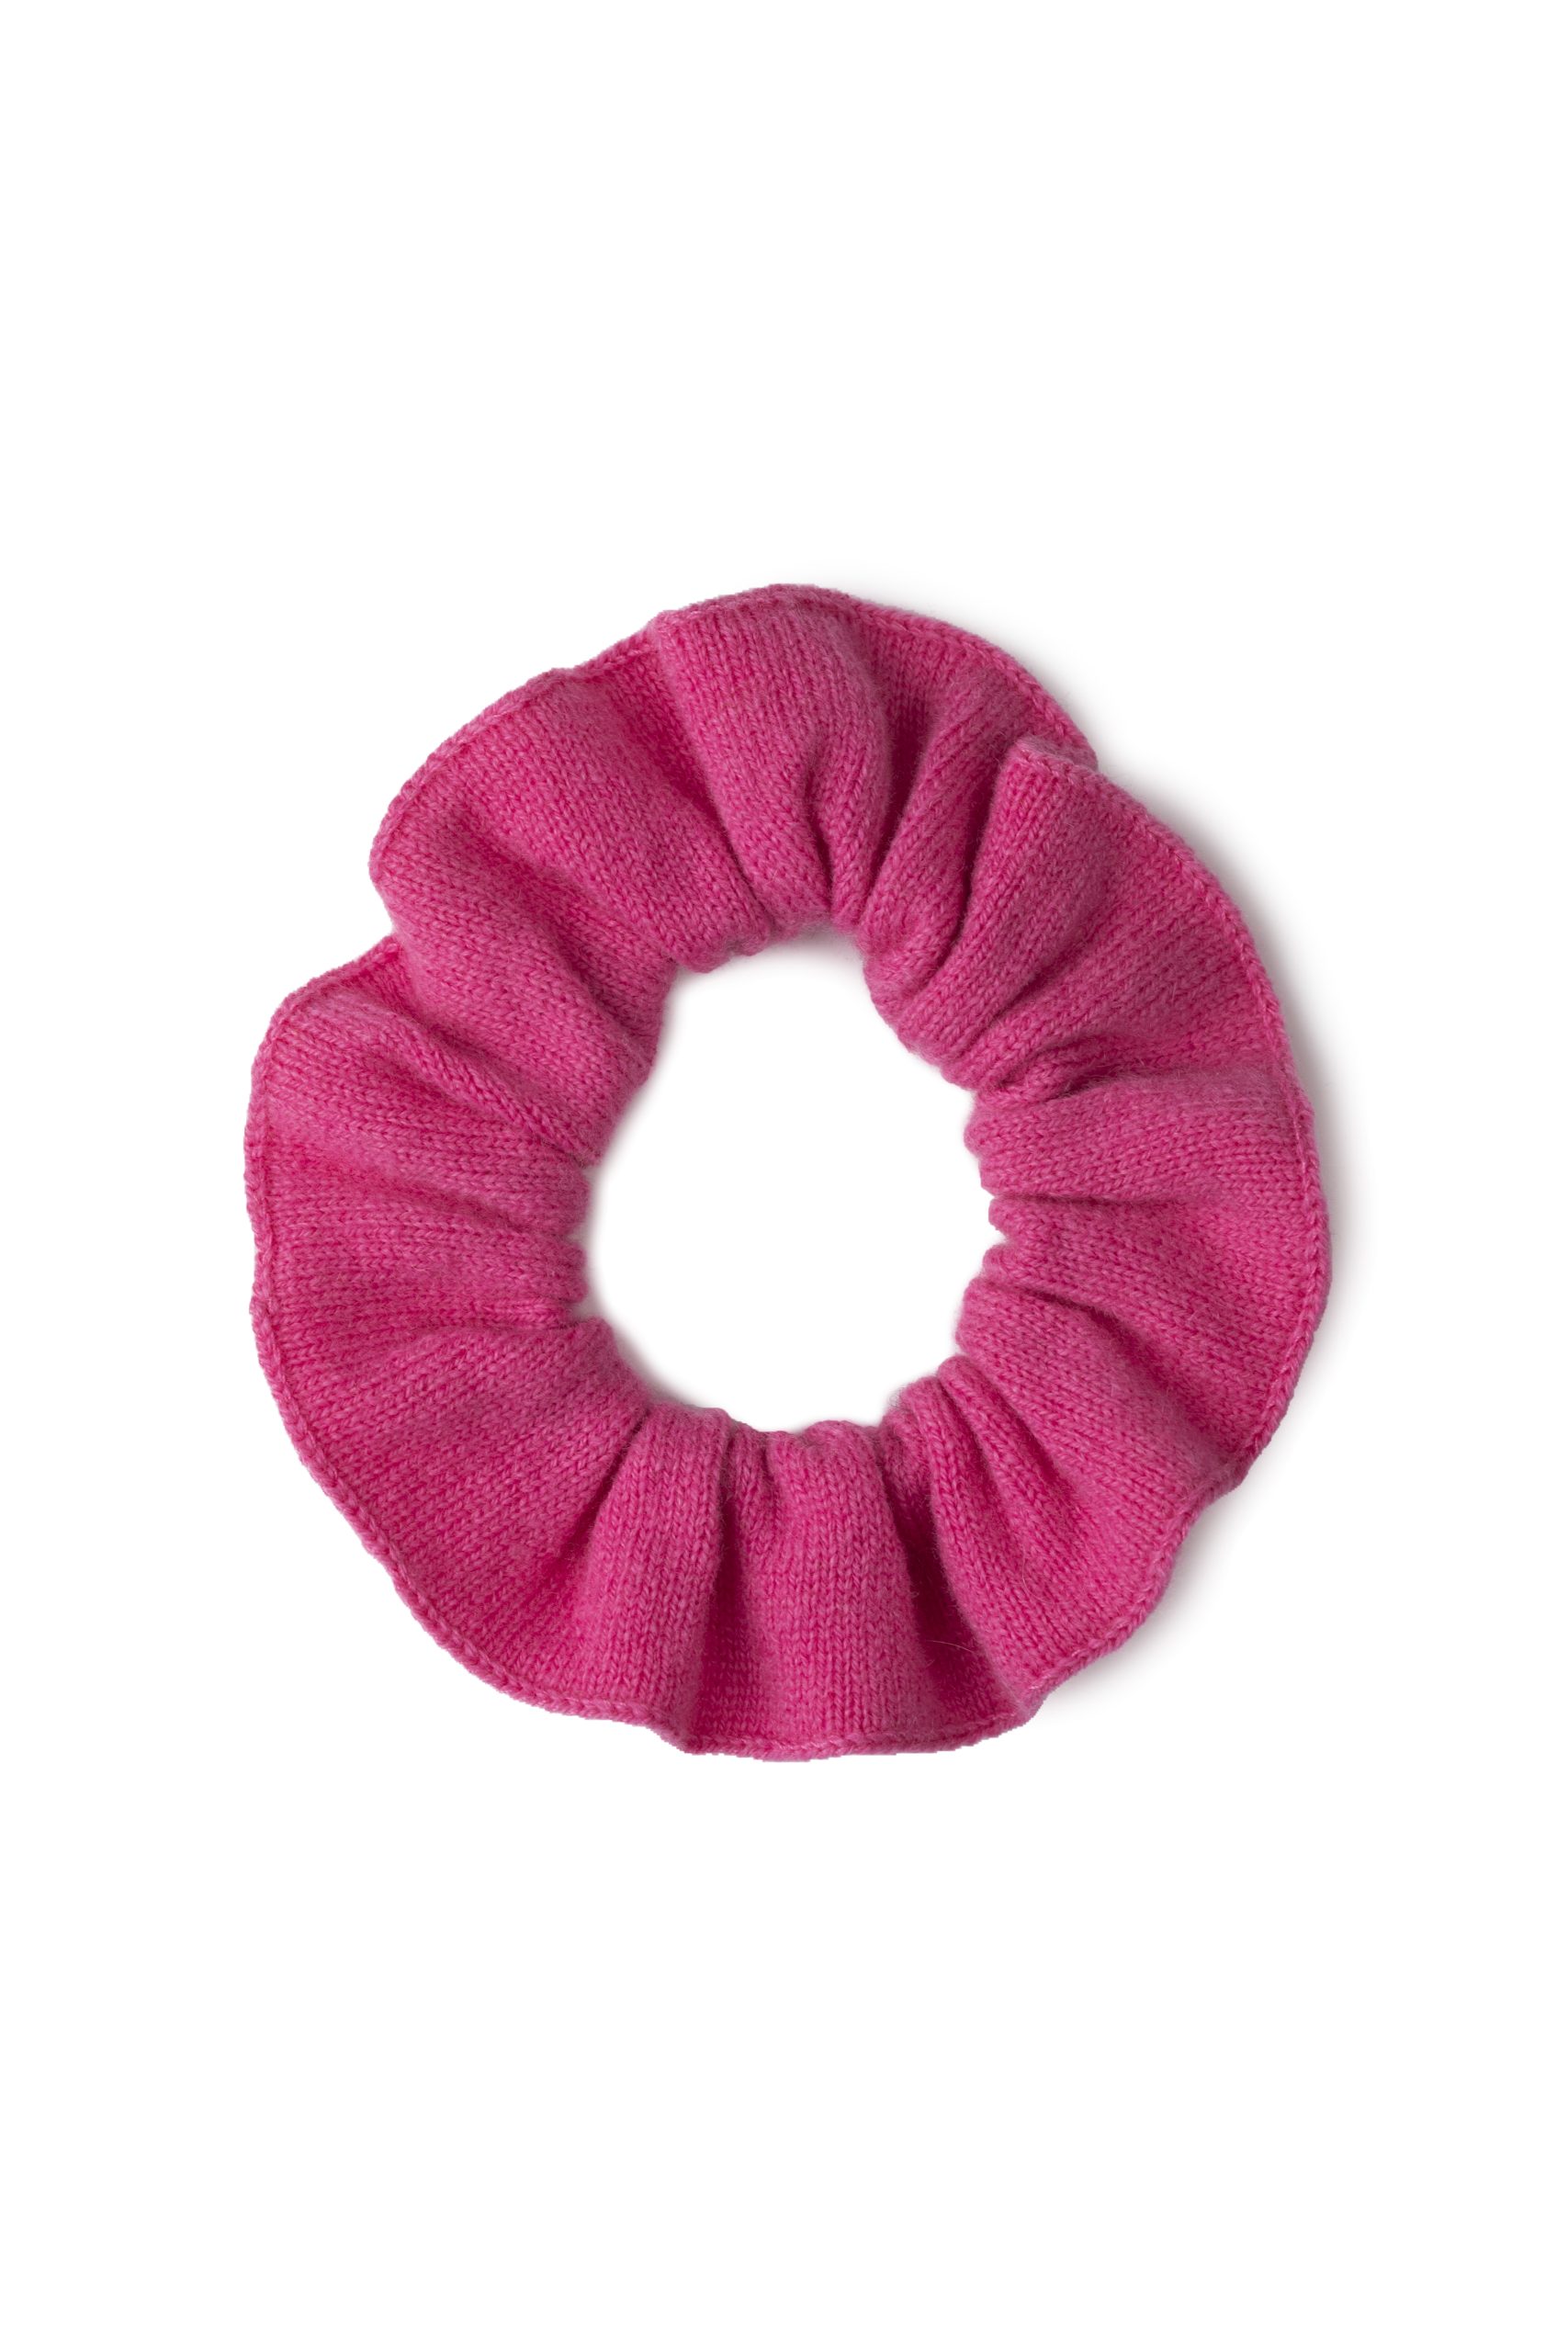 Hårsnodd scrunchie - Elegant i 100 % kashmir bubbelgumsrosa